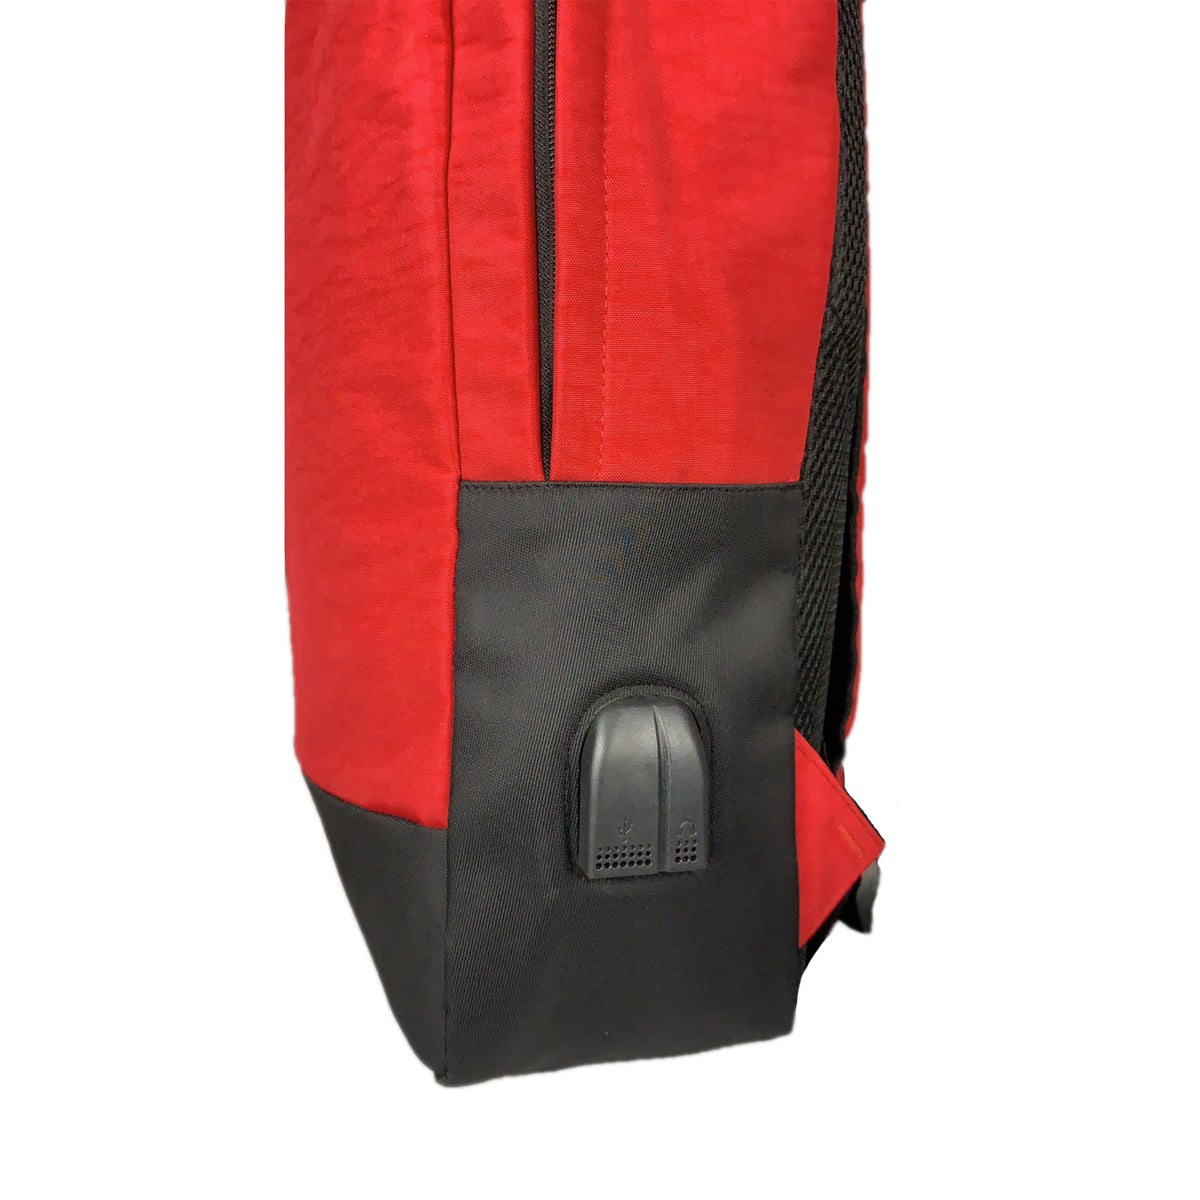 BARCELONA Backpack 15.6 RED 4032